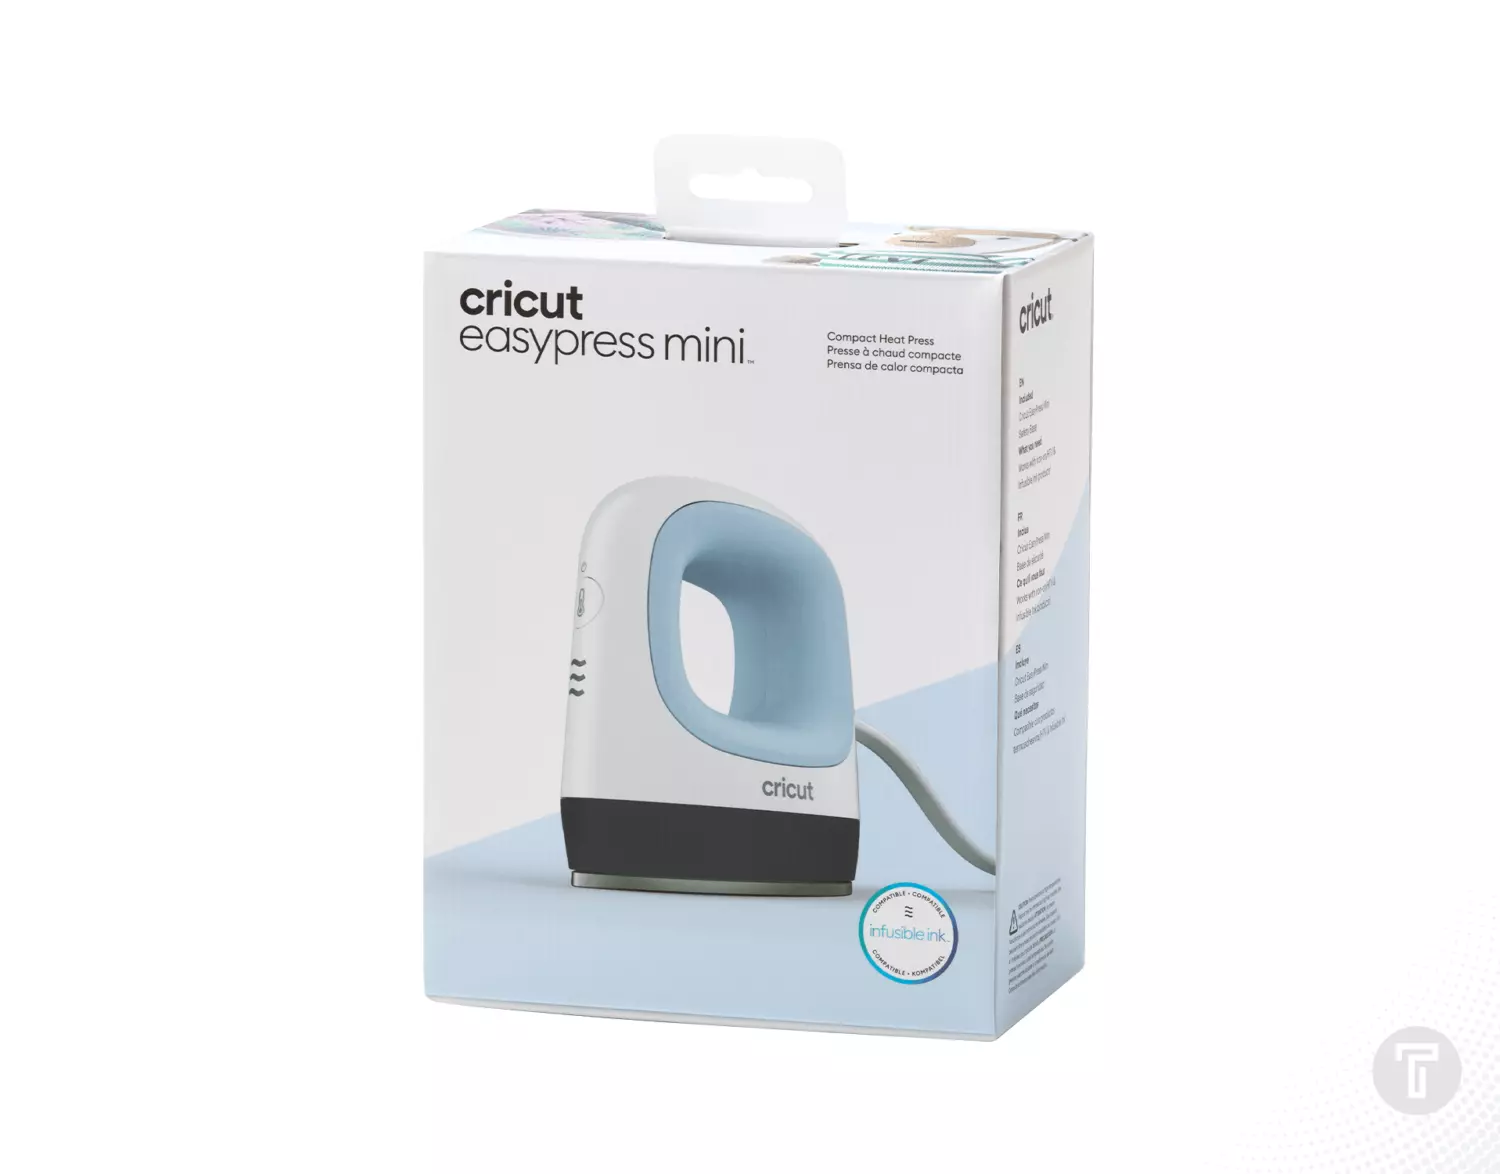 Cricut easypress mini 3 zen blue 2009427 box